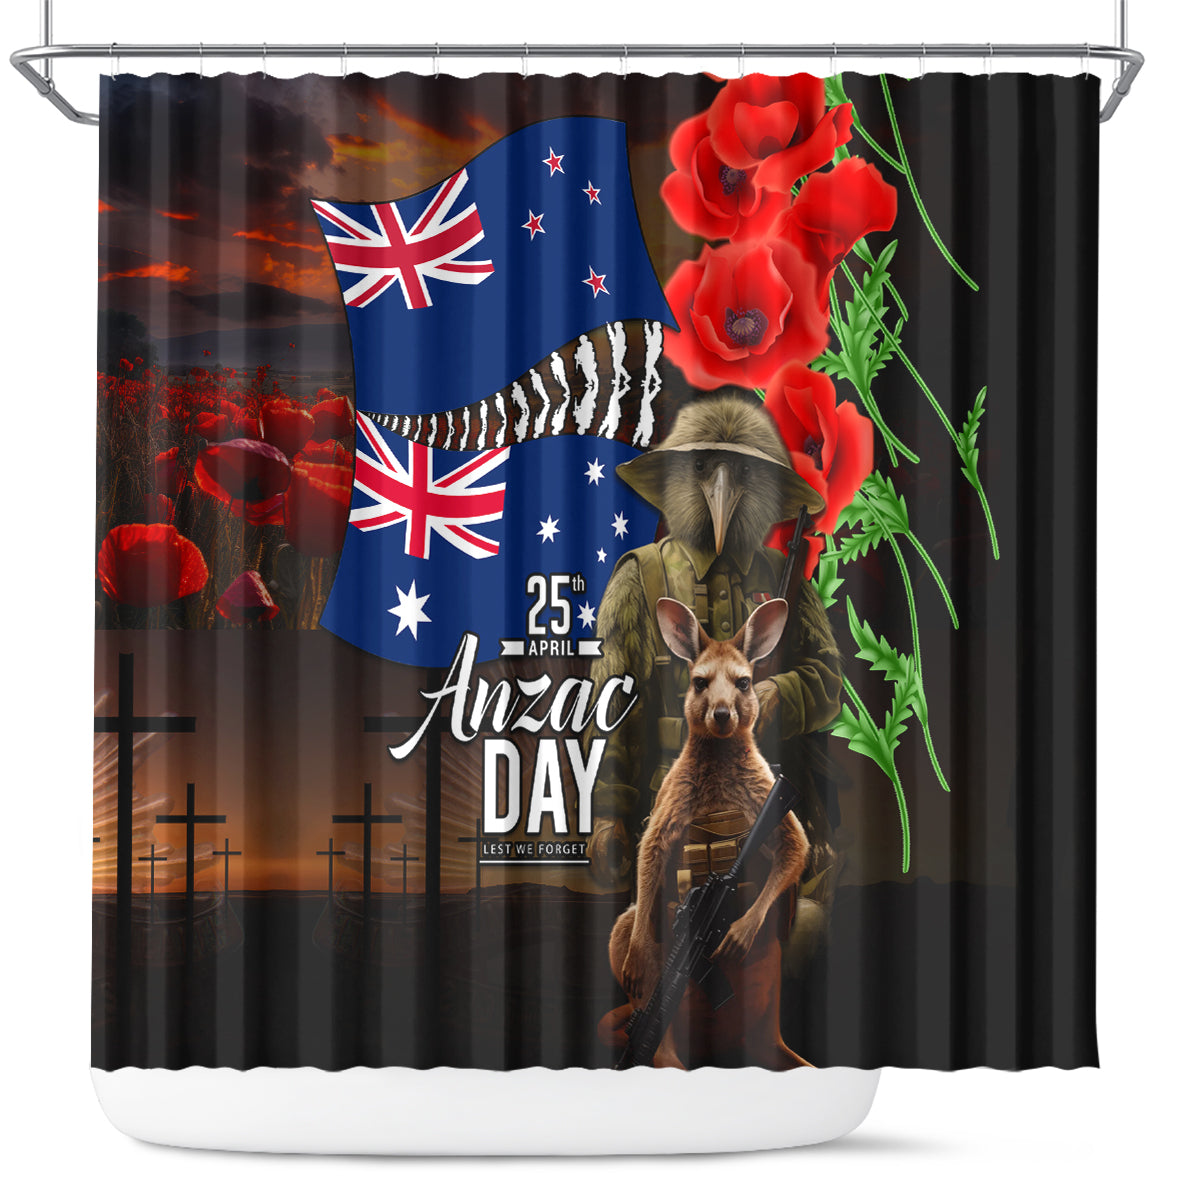 New Zealand and Australia ANZAC Day Shower Curtain National Flag mix Kiwi Bird and Kangaroo Soldier Style